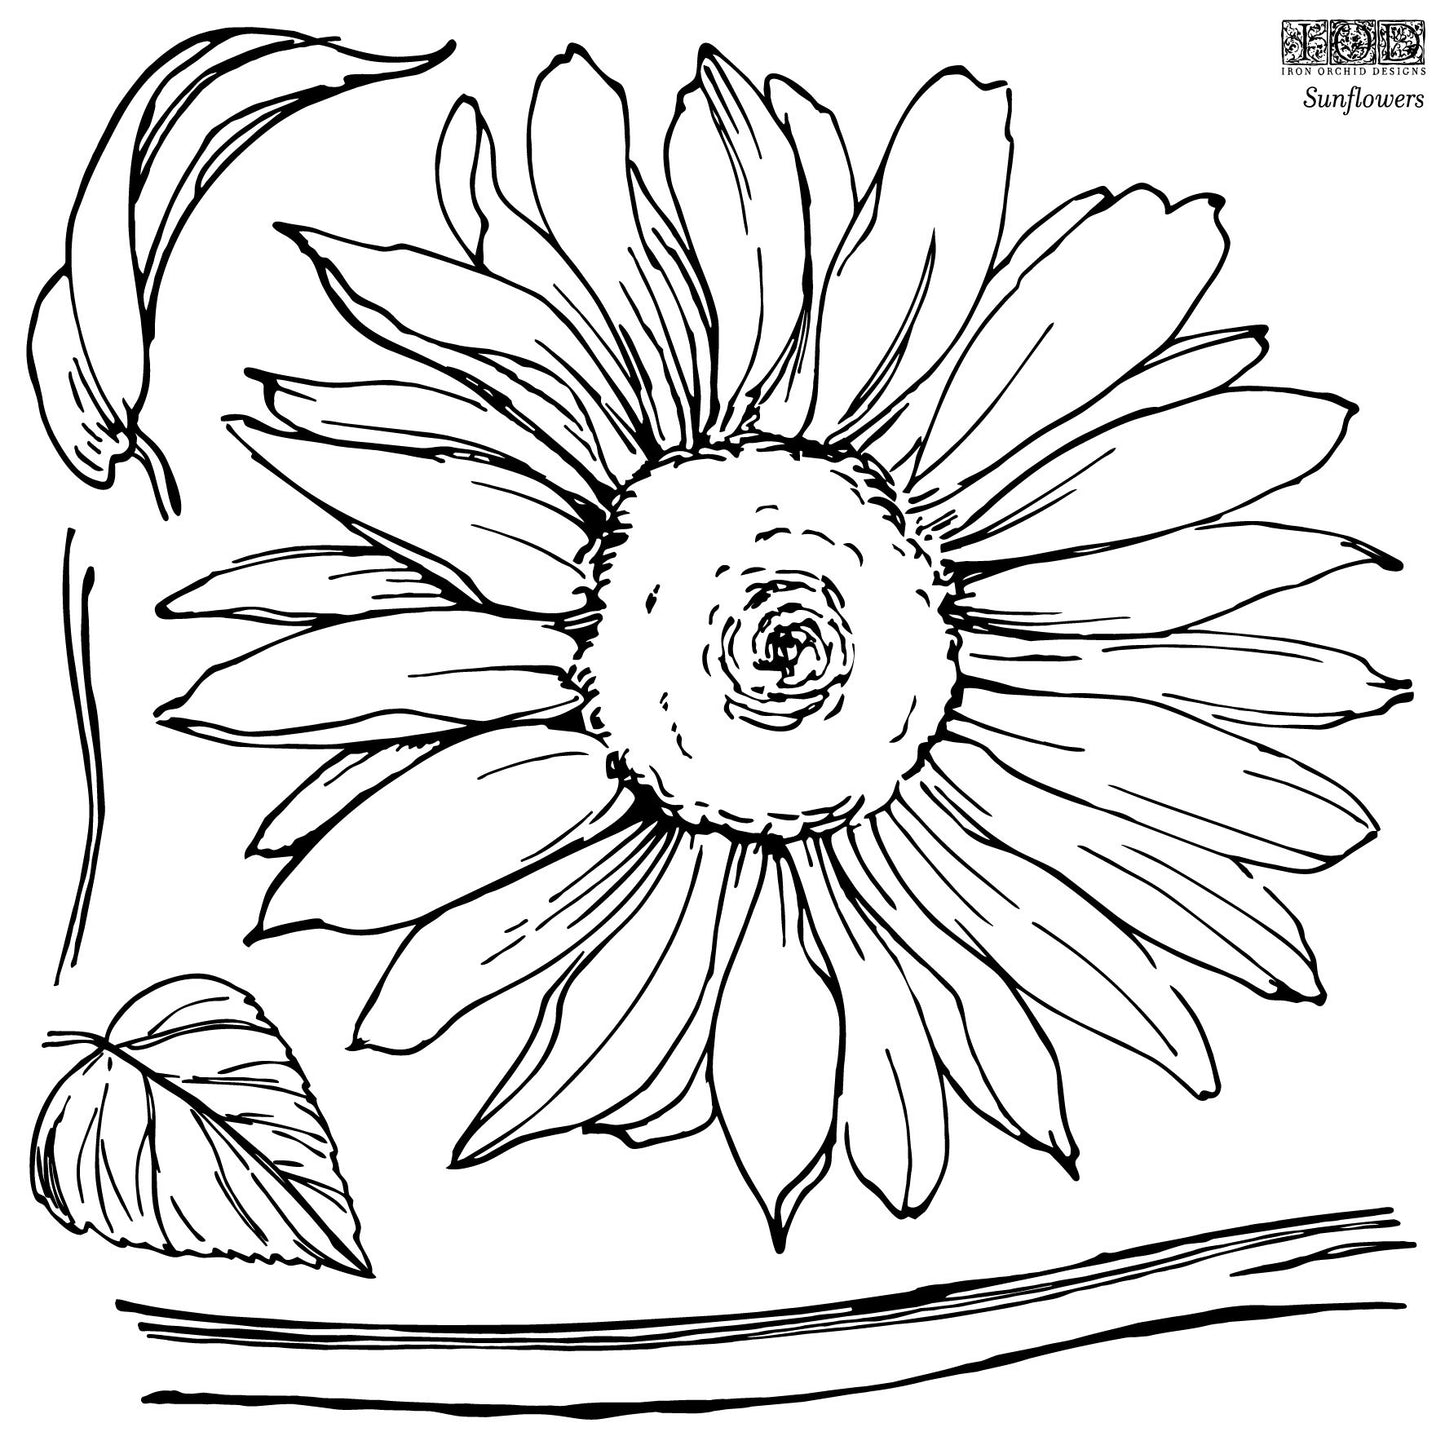 Sunflowers - 12x12 Decor Stamp™